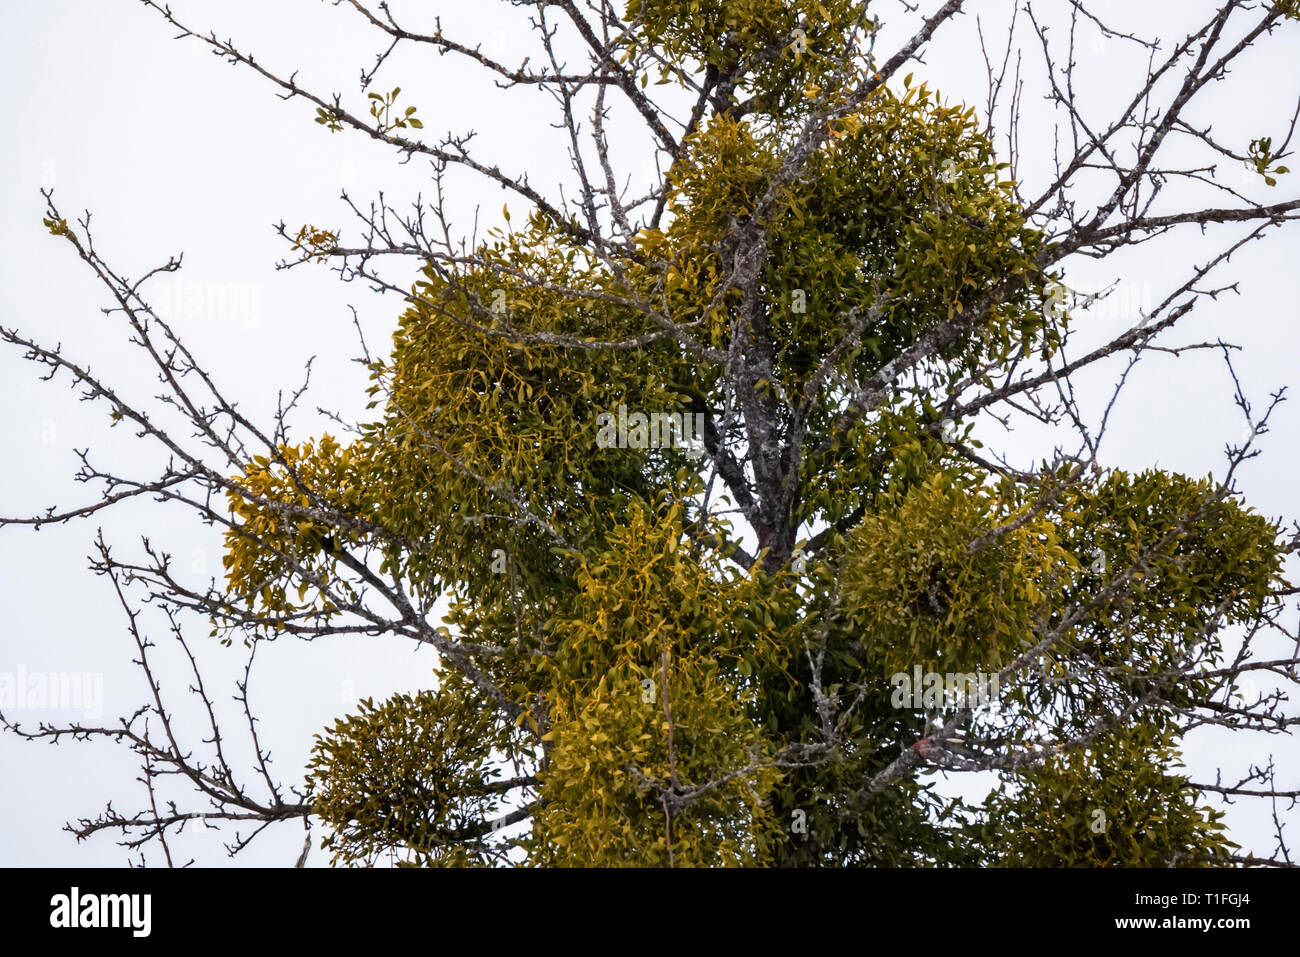 Green Viscum mistletoe tree against grey sky Stock Photo